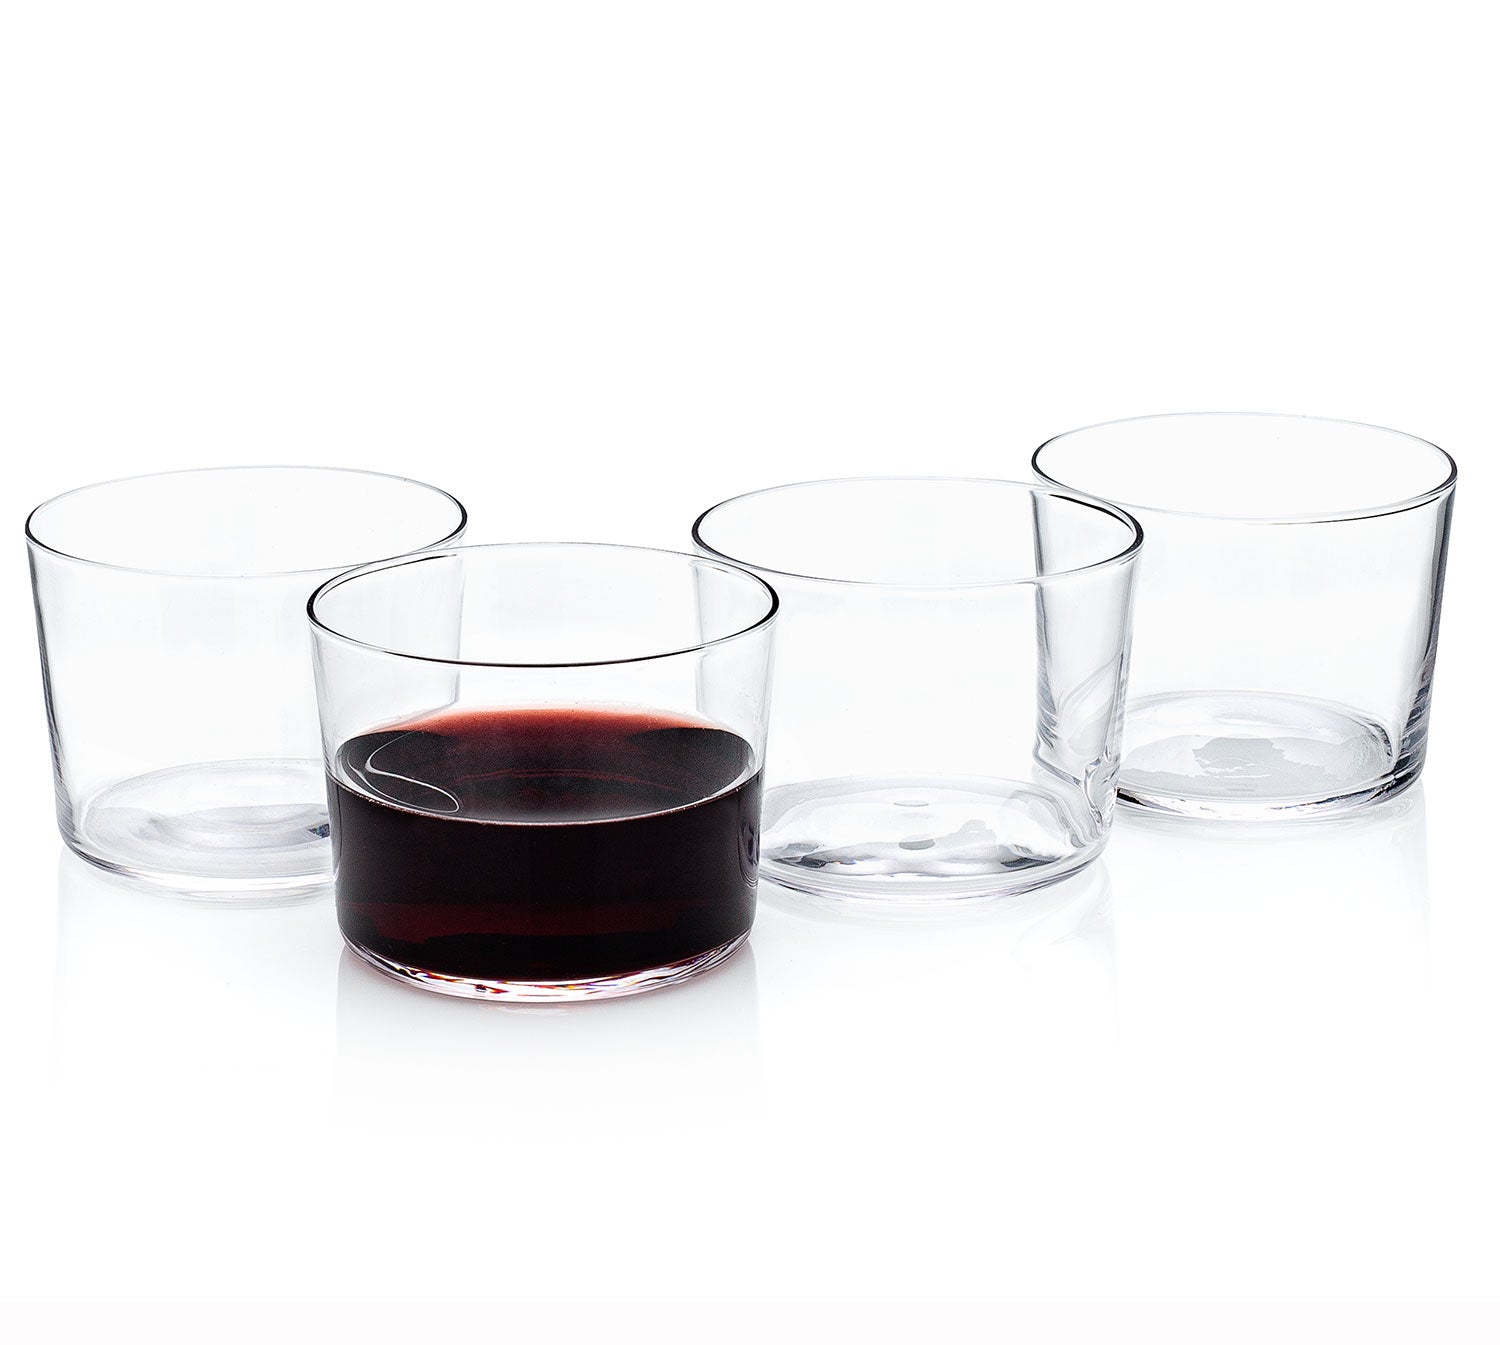 4 Wine Glass Gift Set